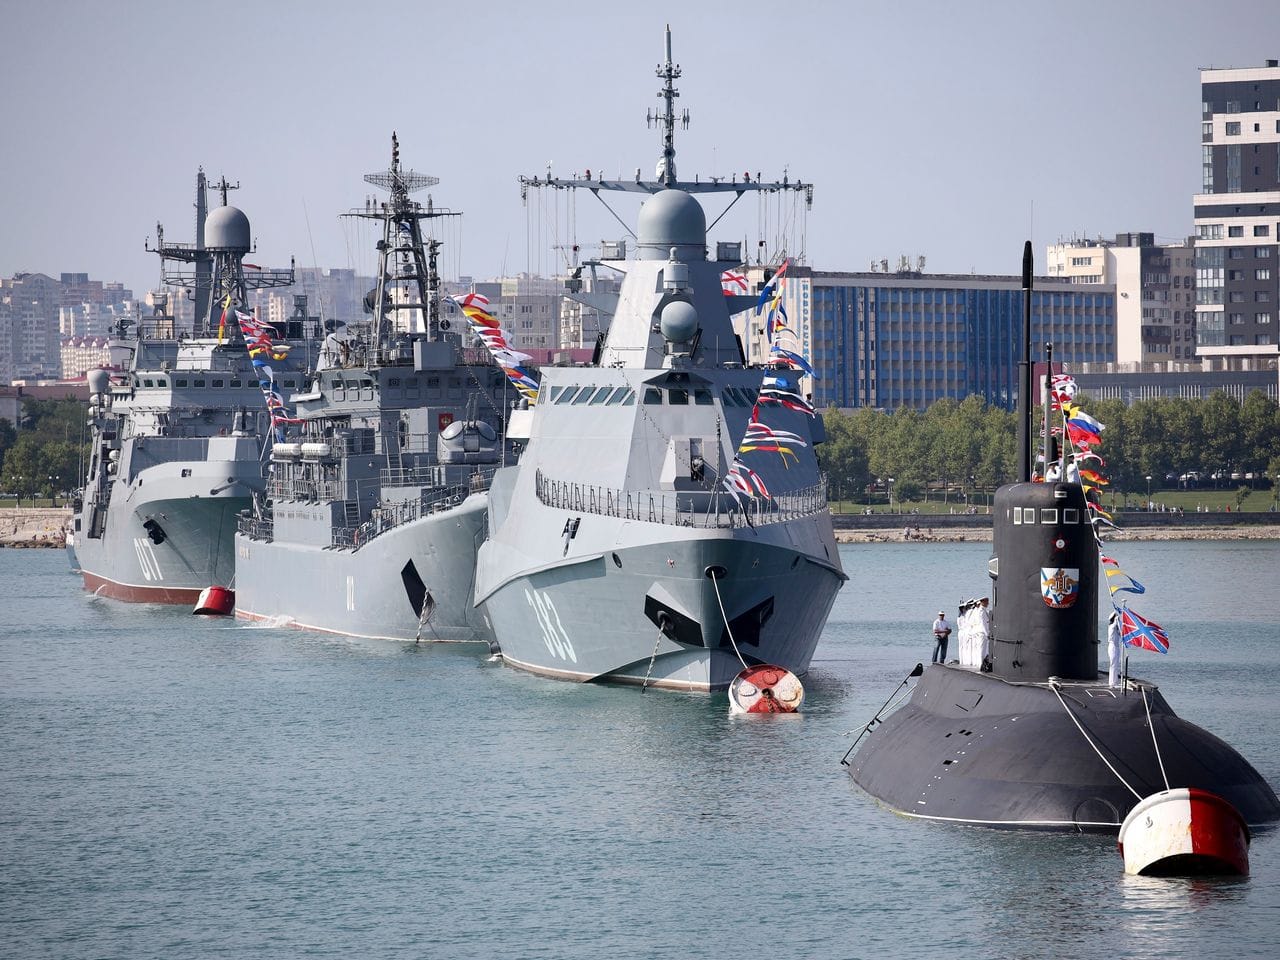 Strikes on Russian Black Sea fleet escalate tensions (Credits The Wall Street Journal)